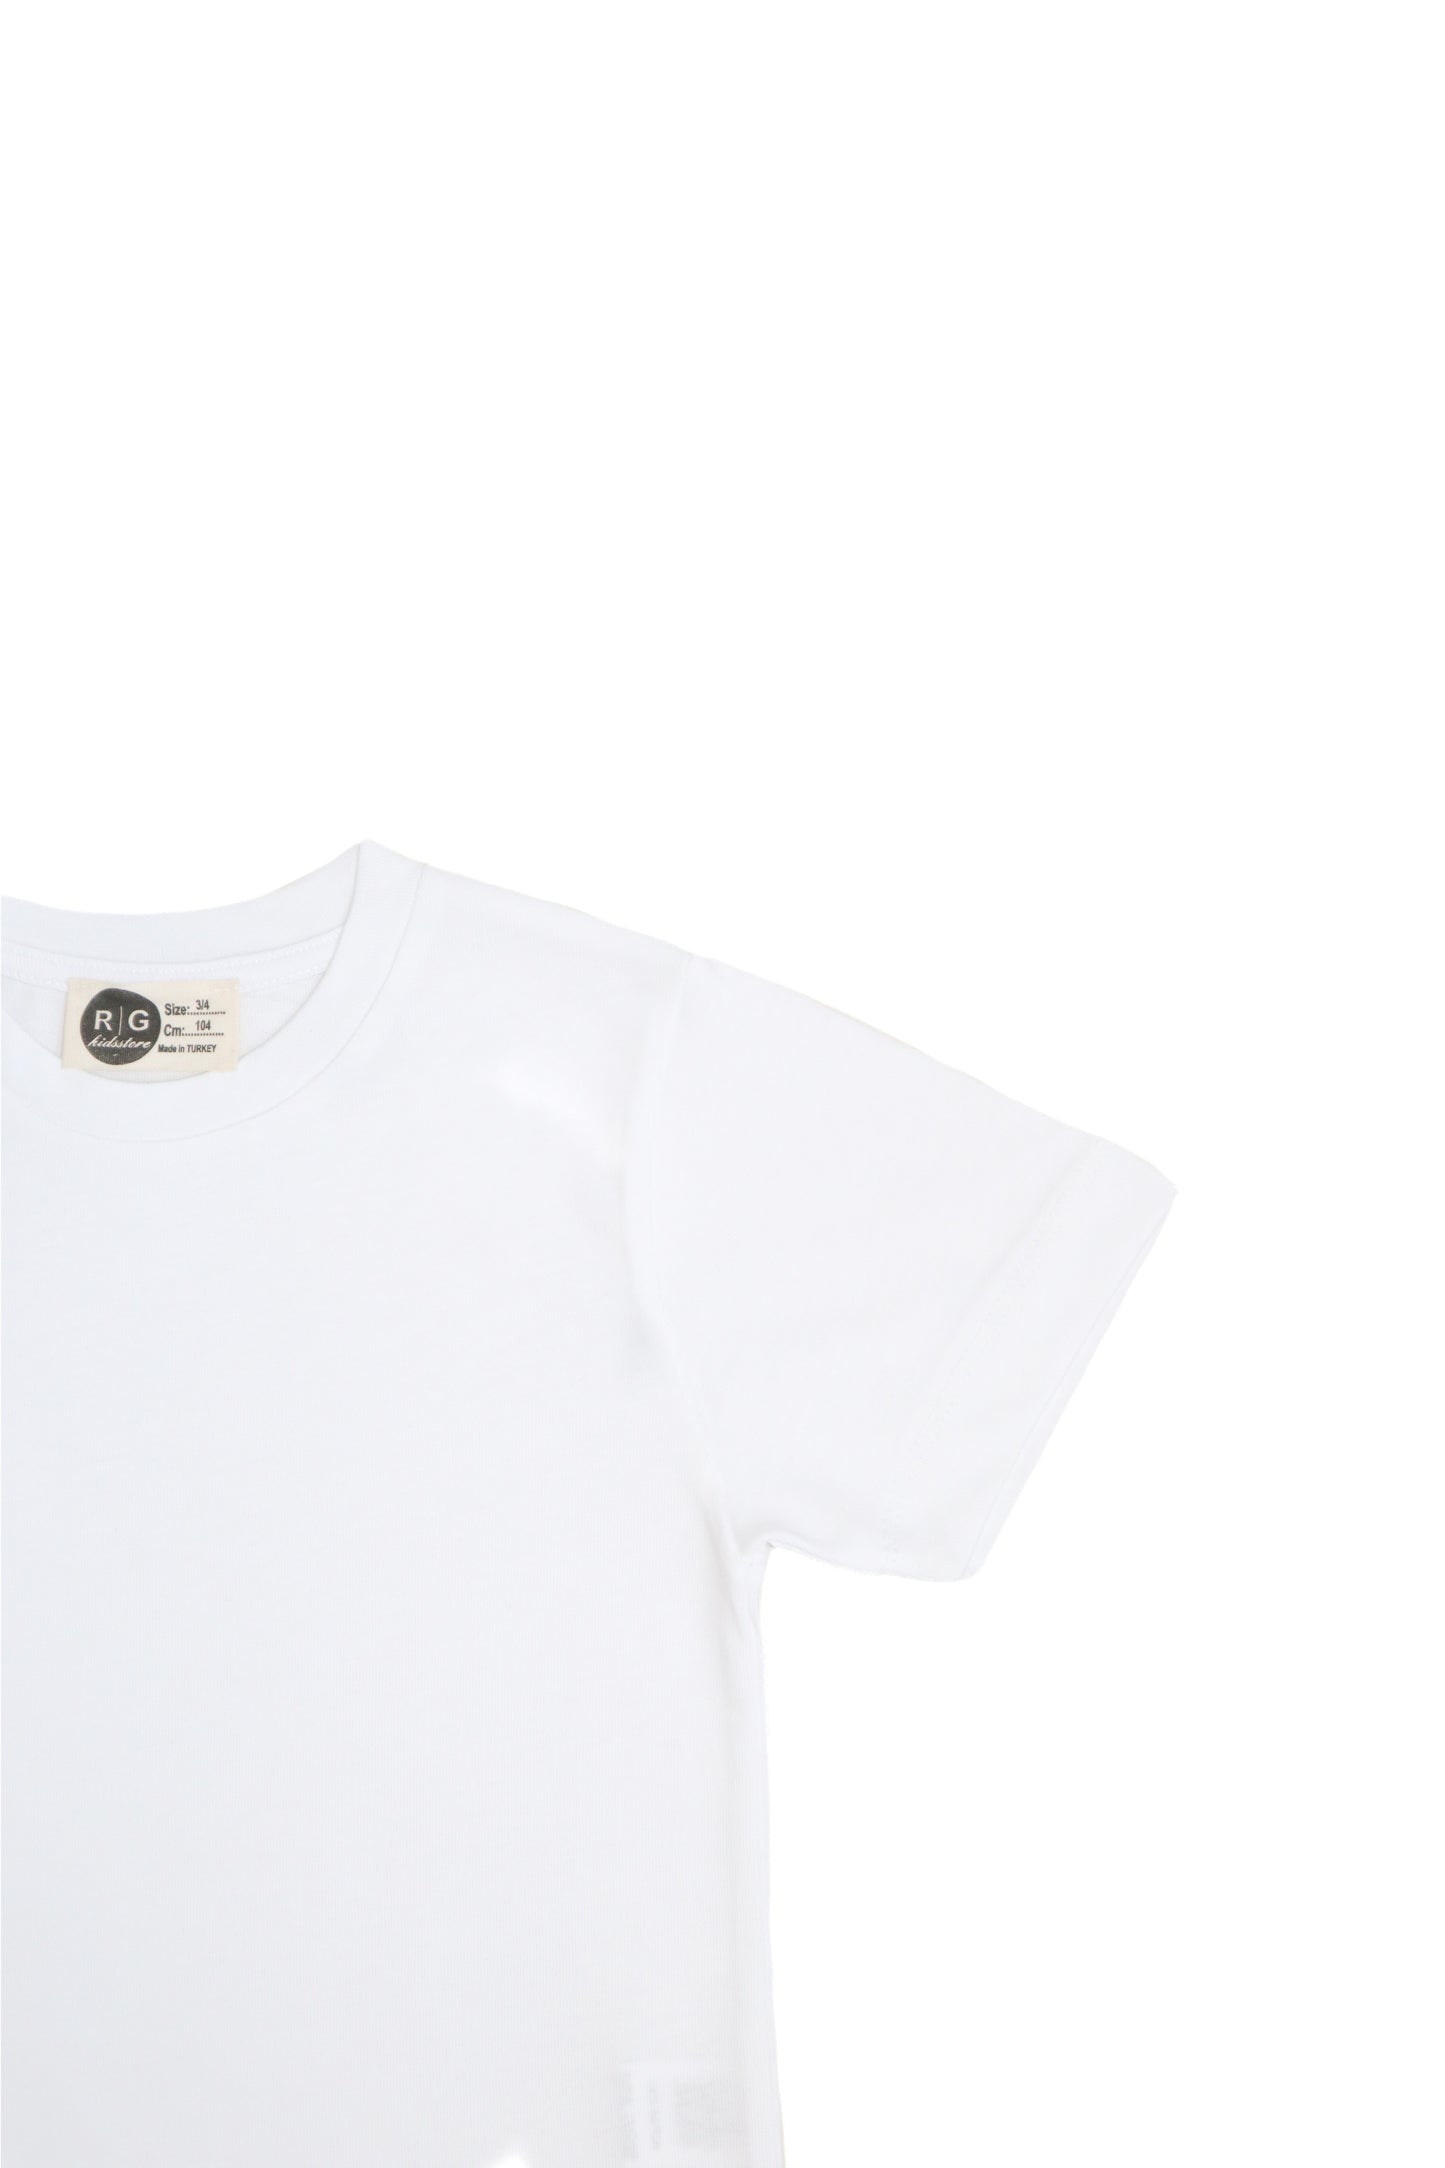 Youth 100% Cotton Basic T-Shirt